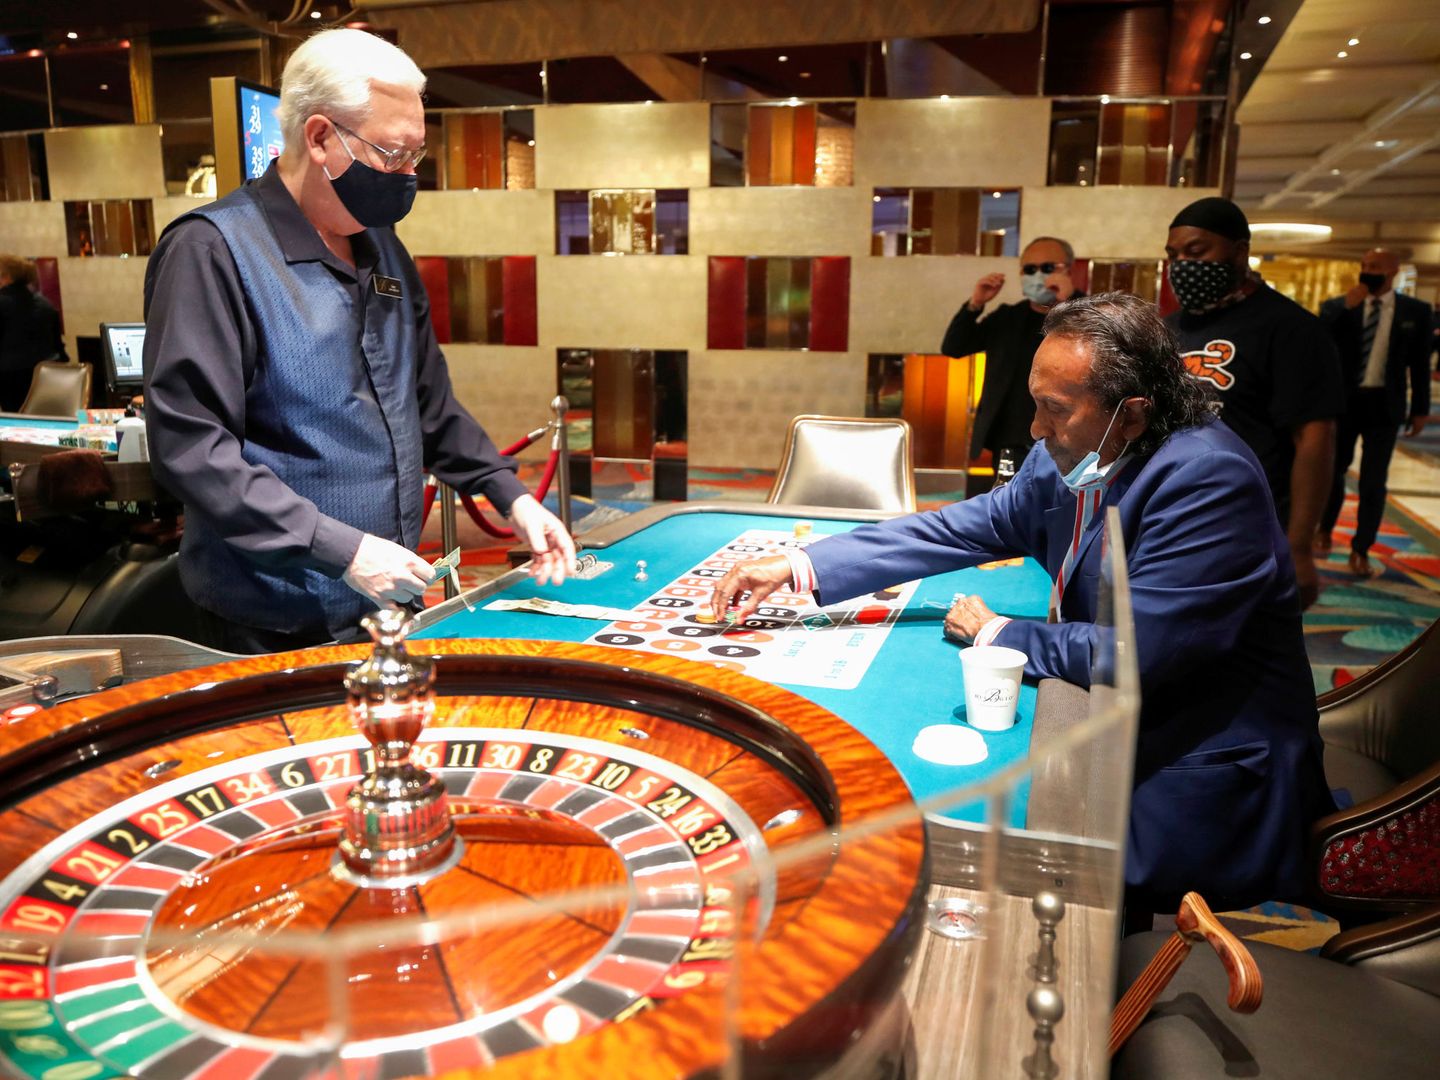 Ruleta en un casino de las Vegas, en plena época del Covid-19 (Reuters)